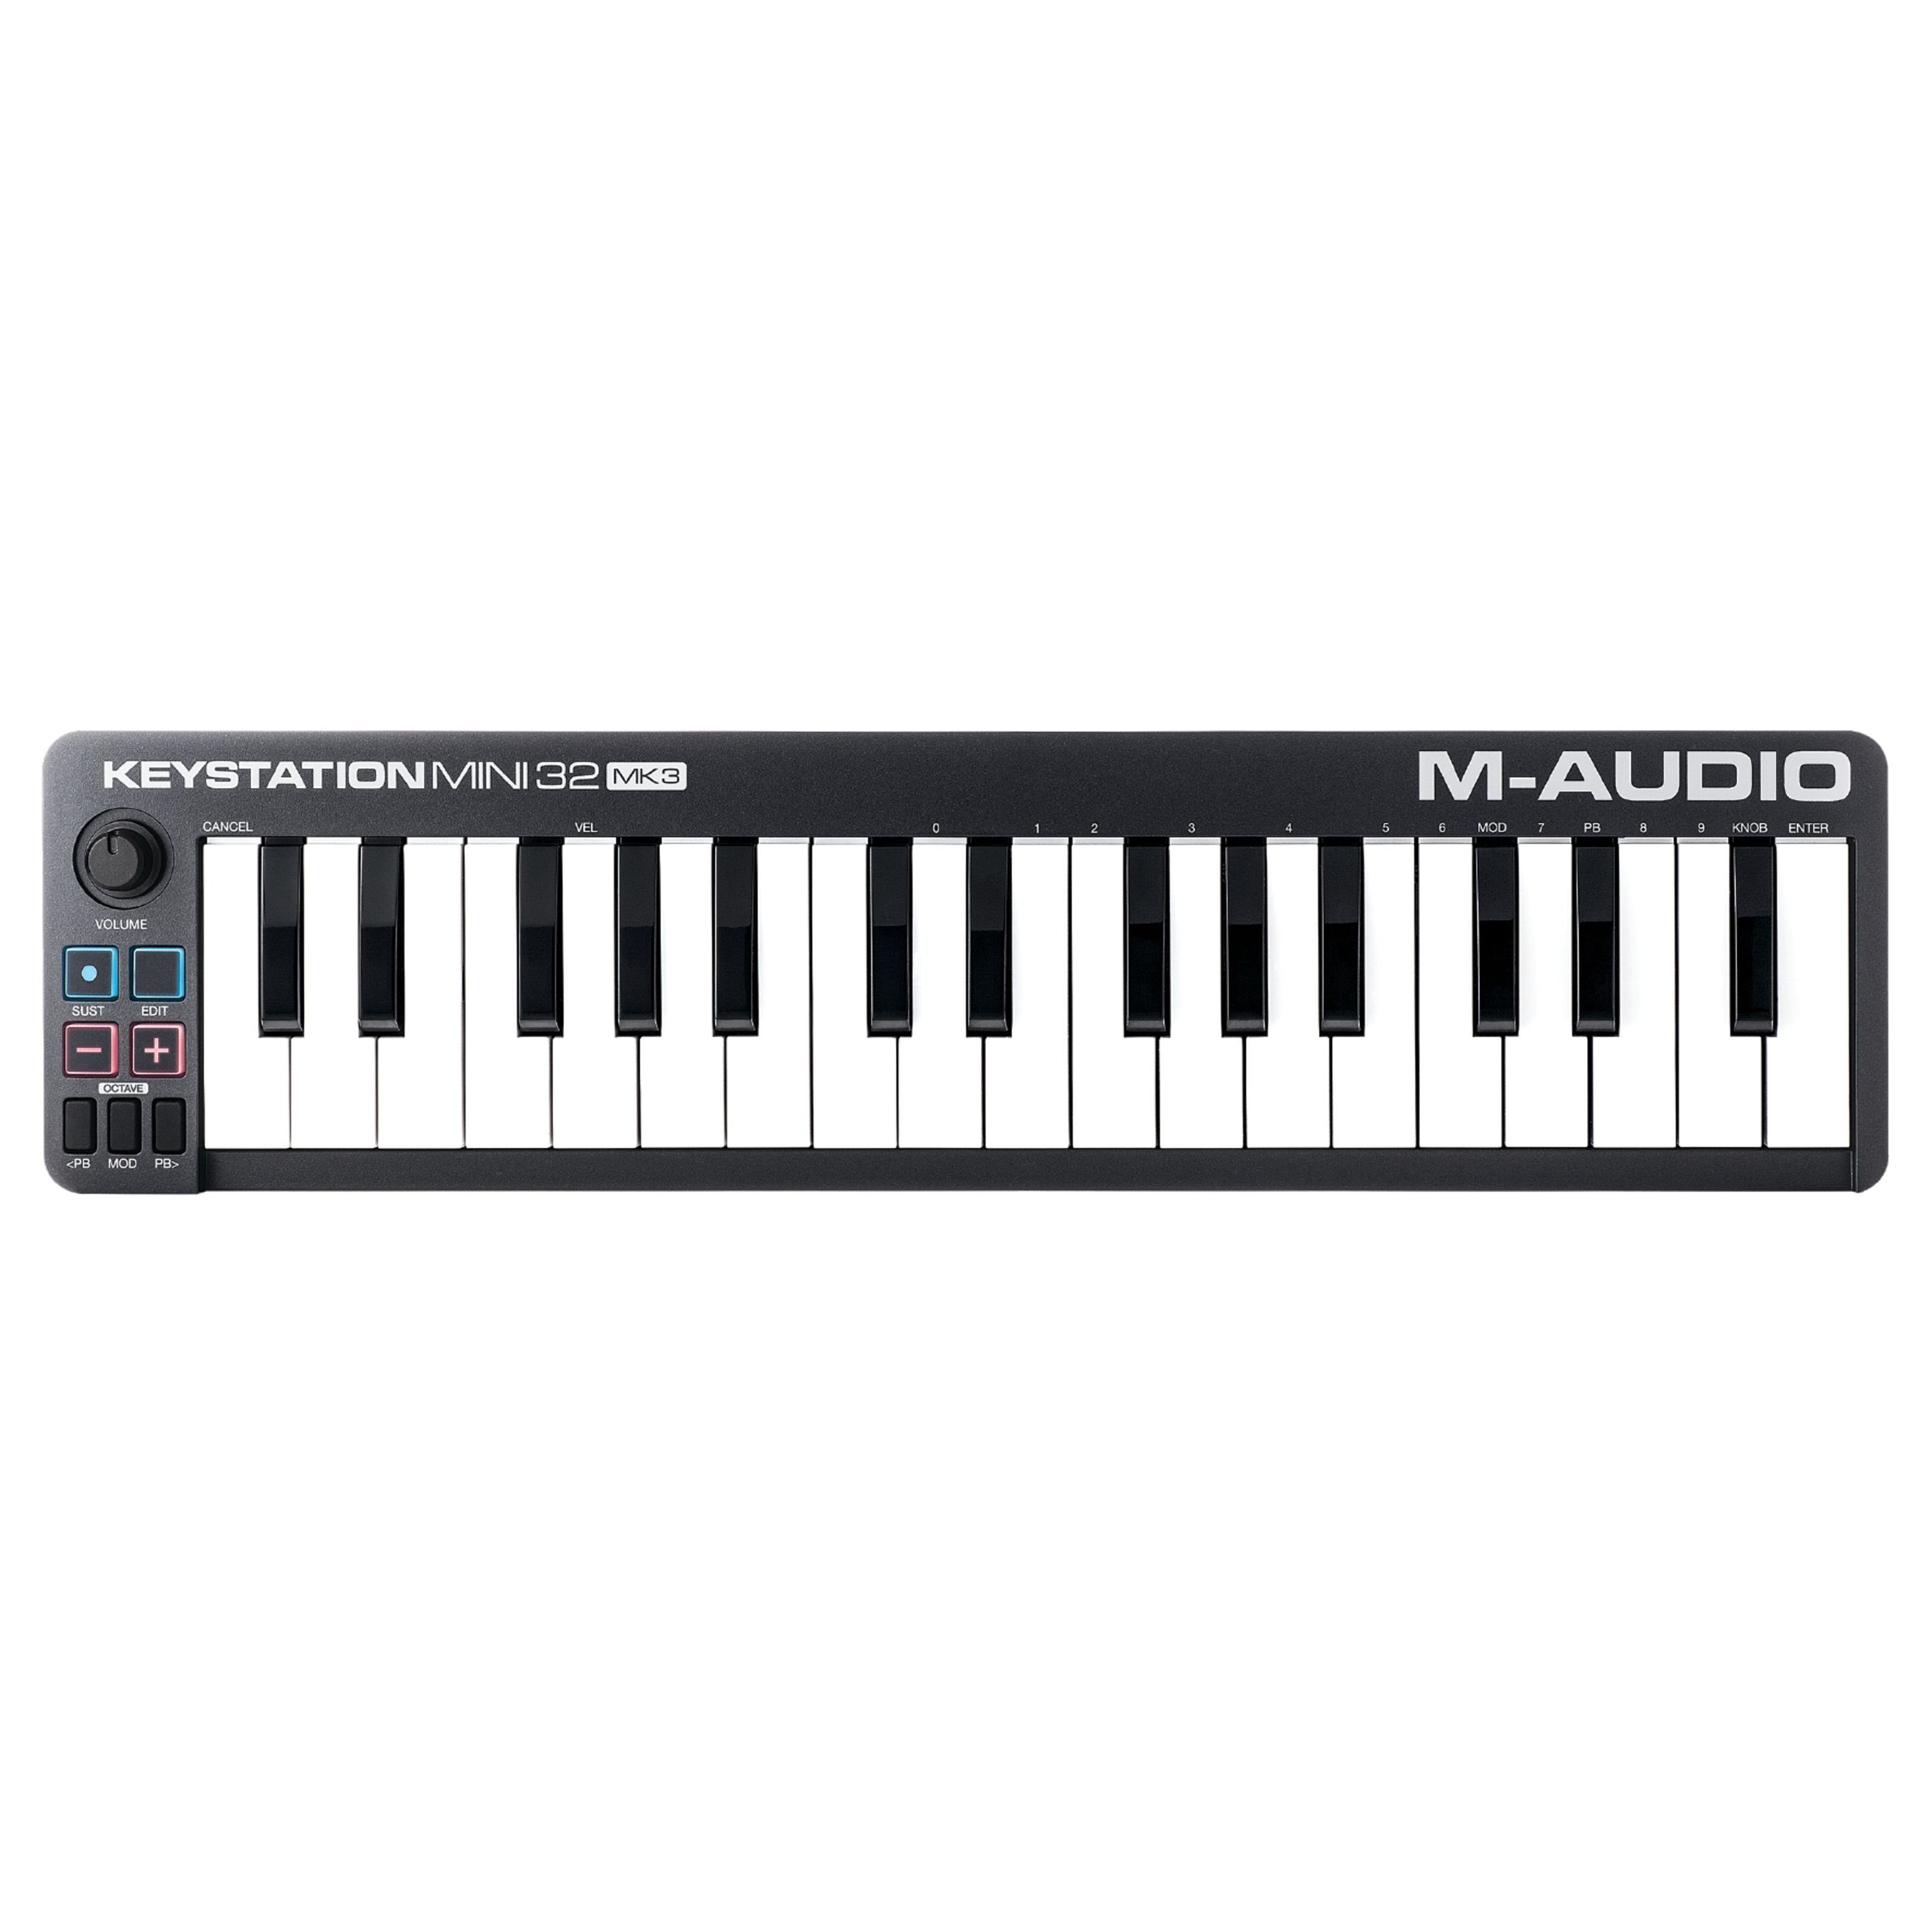 M-AUDIO Masterkeyboard (Keystation Mini 32 Mk3, Masterkeyboards, MIDI-Keyboard mini), Keystation Mini 32 Mk3 - Master Keyboard Mini